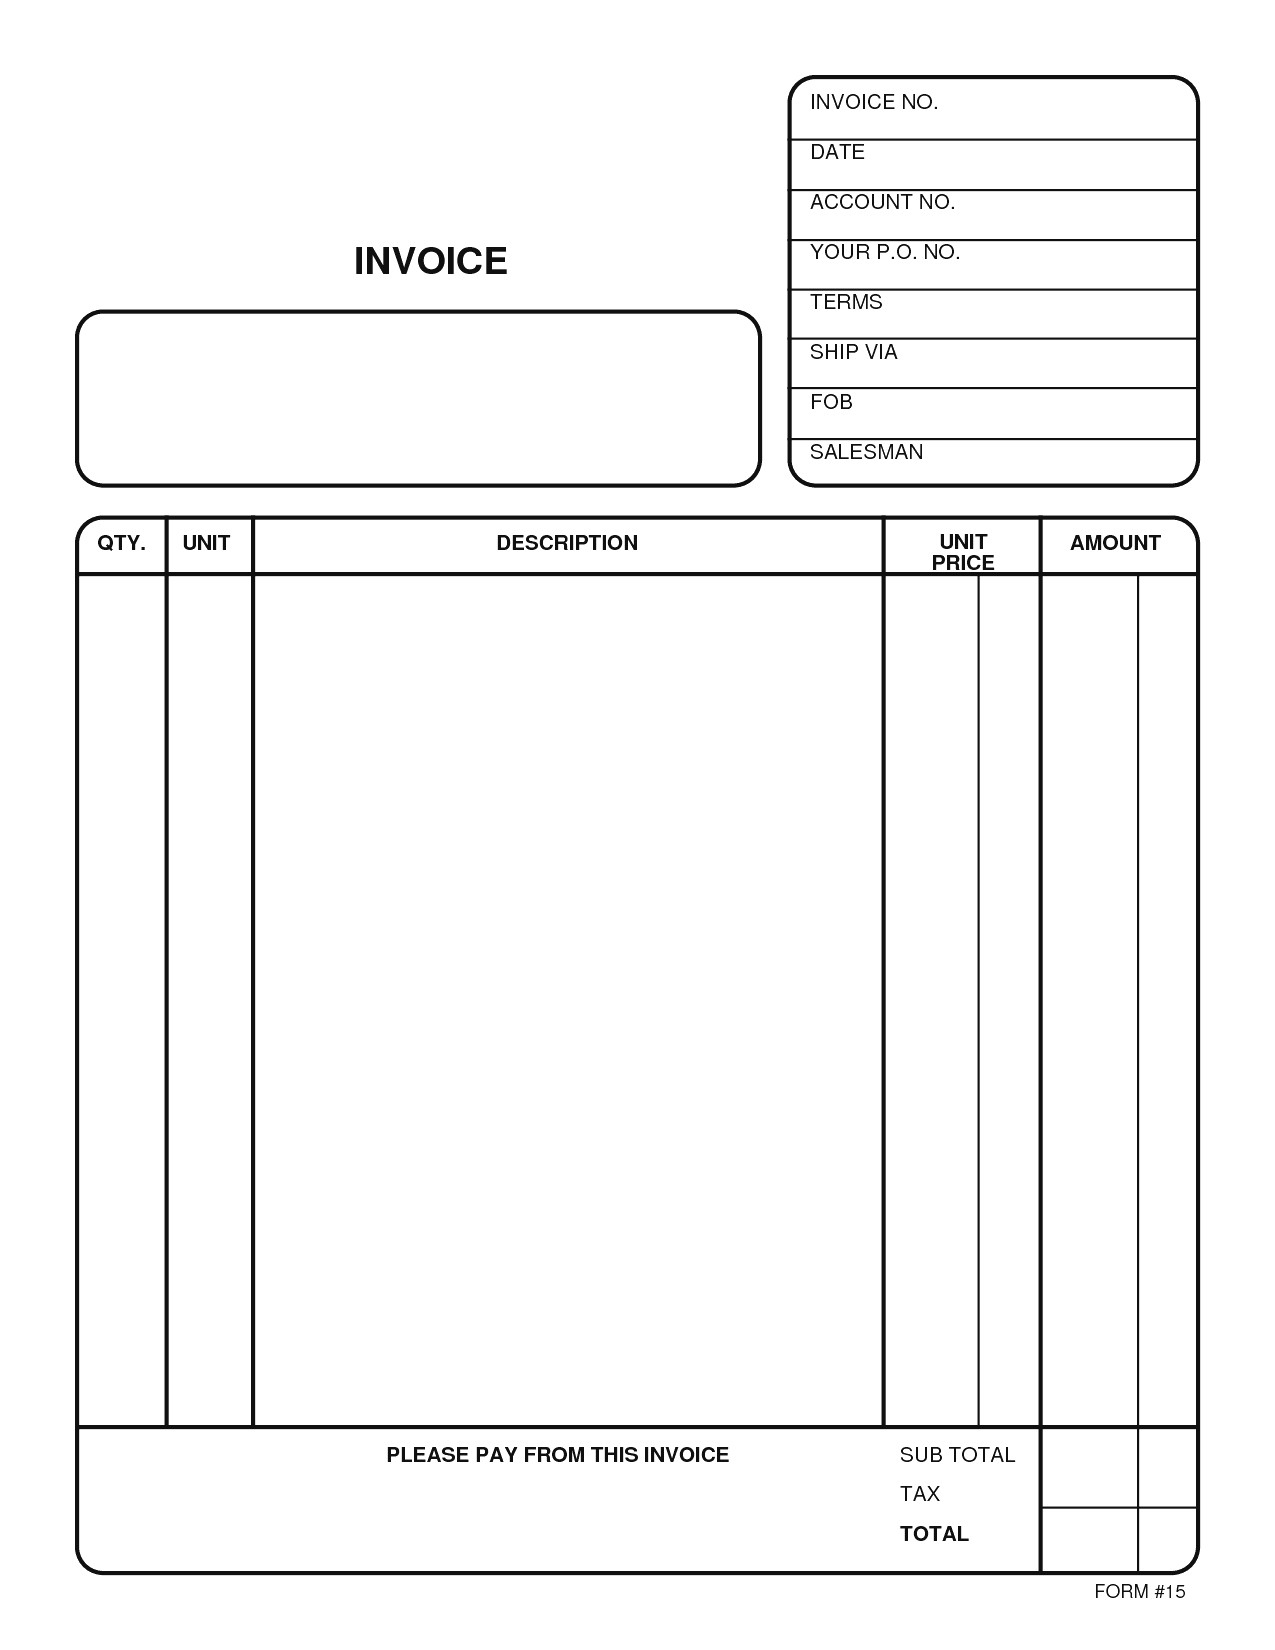 Free Printable Blank Invoice Templates 8 - Colorium Laboratorium - Free Printable Blank Invoice